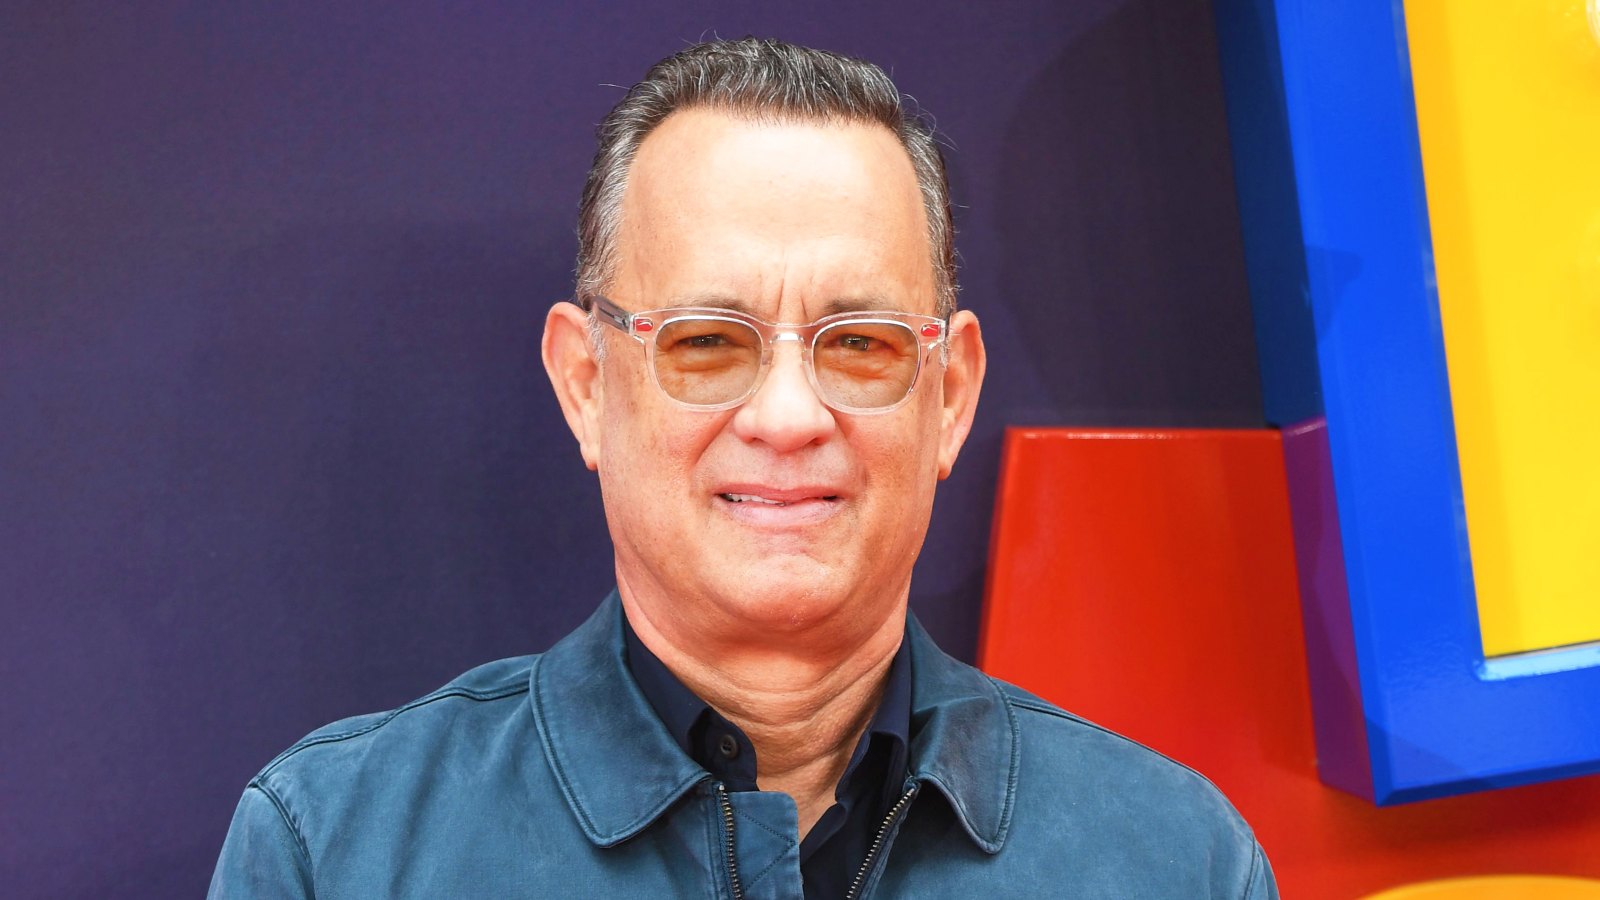 Tom Hanks Returns to TV to Host 'Saturday Night Live' Following Coronavirus Diagnosis